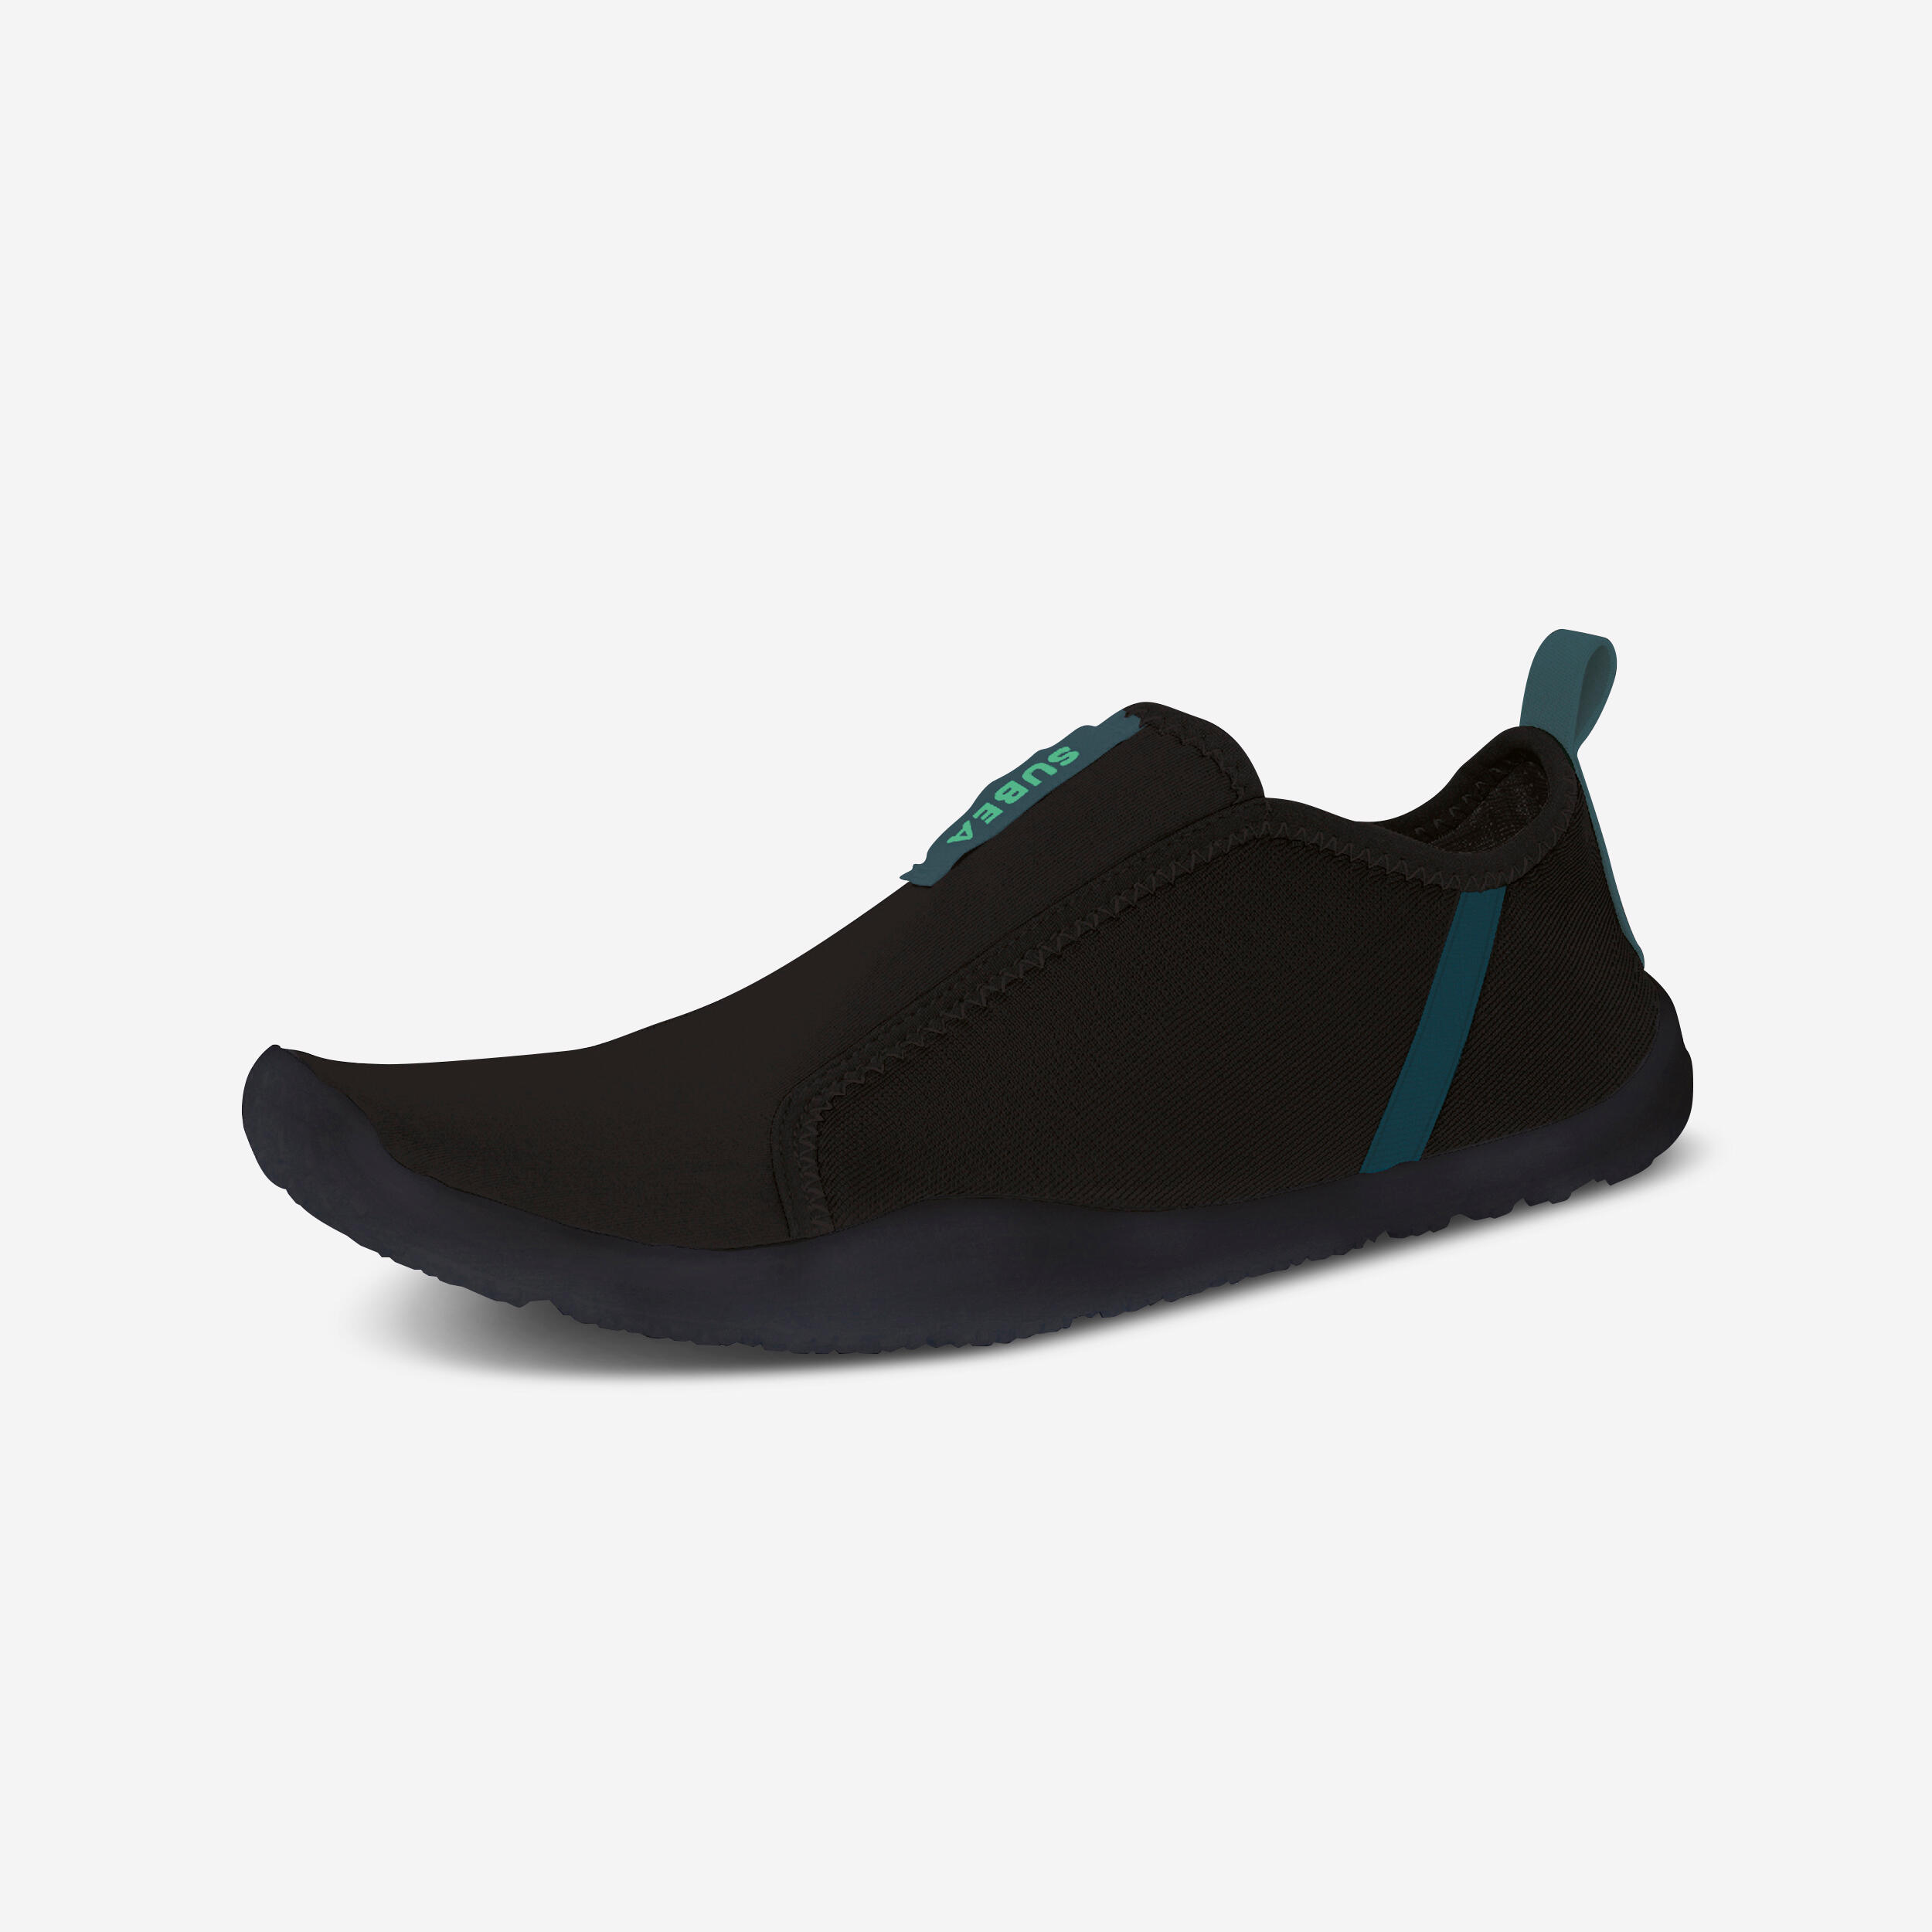 Chaussures Aquatiques Élastiques Adulte - Aquashoes 120 Noir - SUBEA